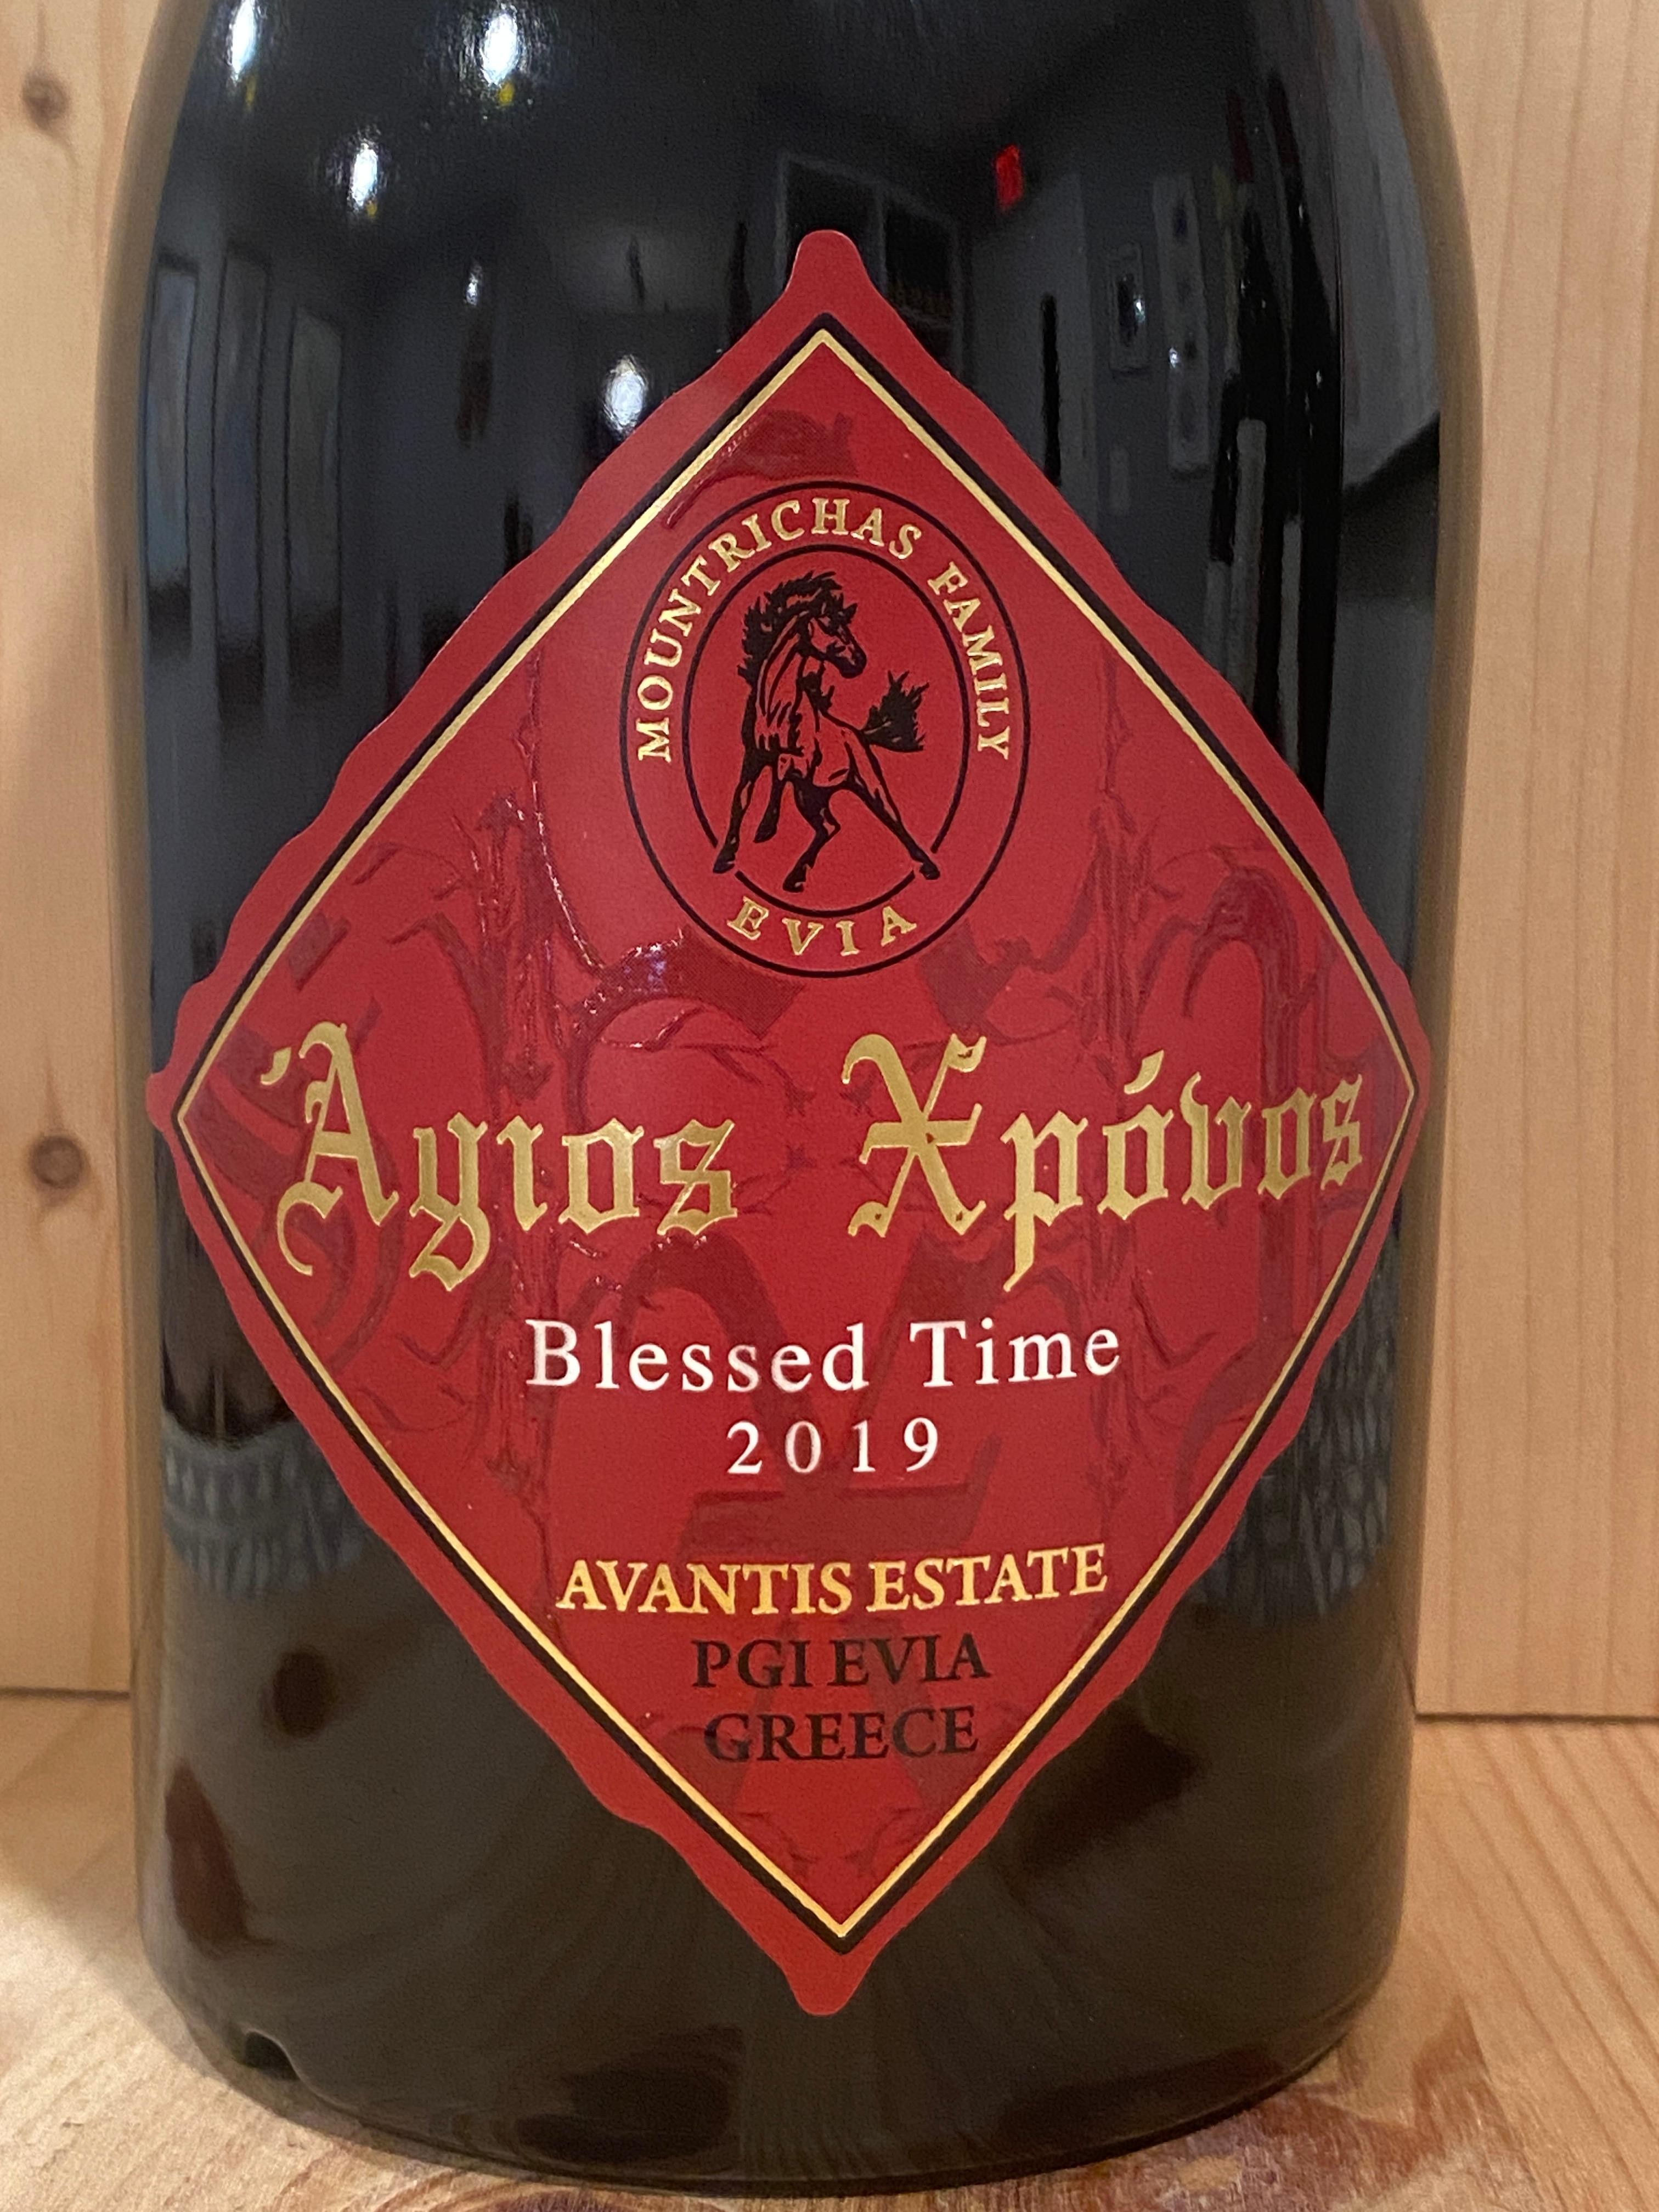 Avantis Estate " Blessed Time" 2019: Evia, Greece